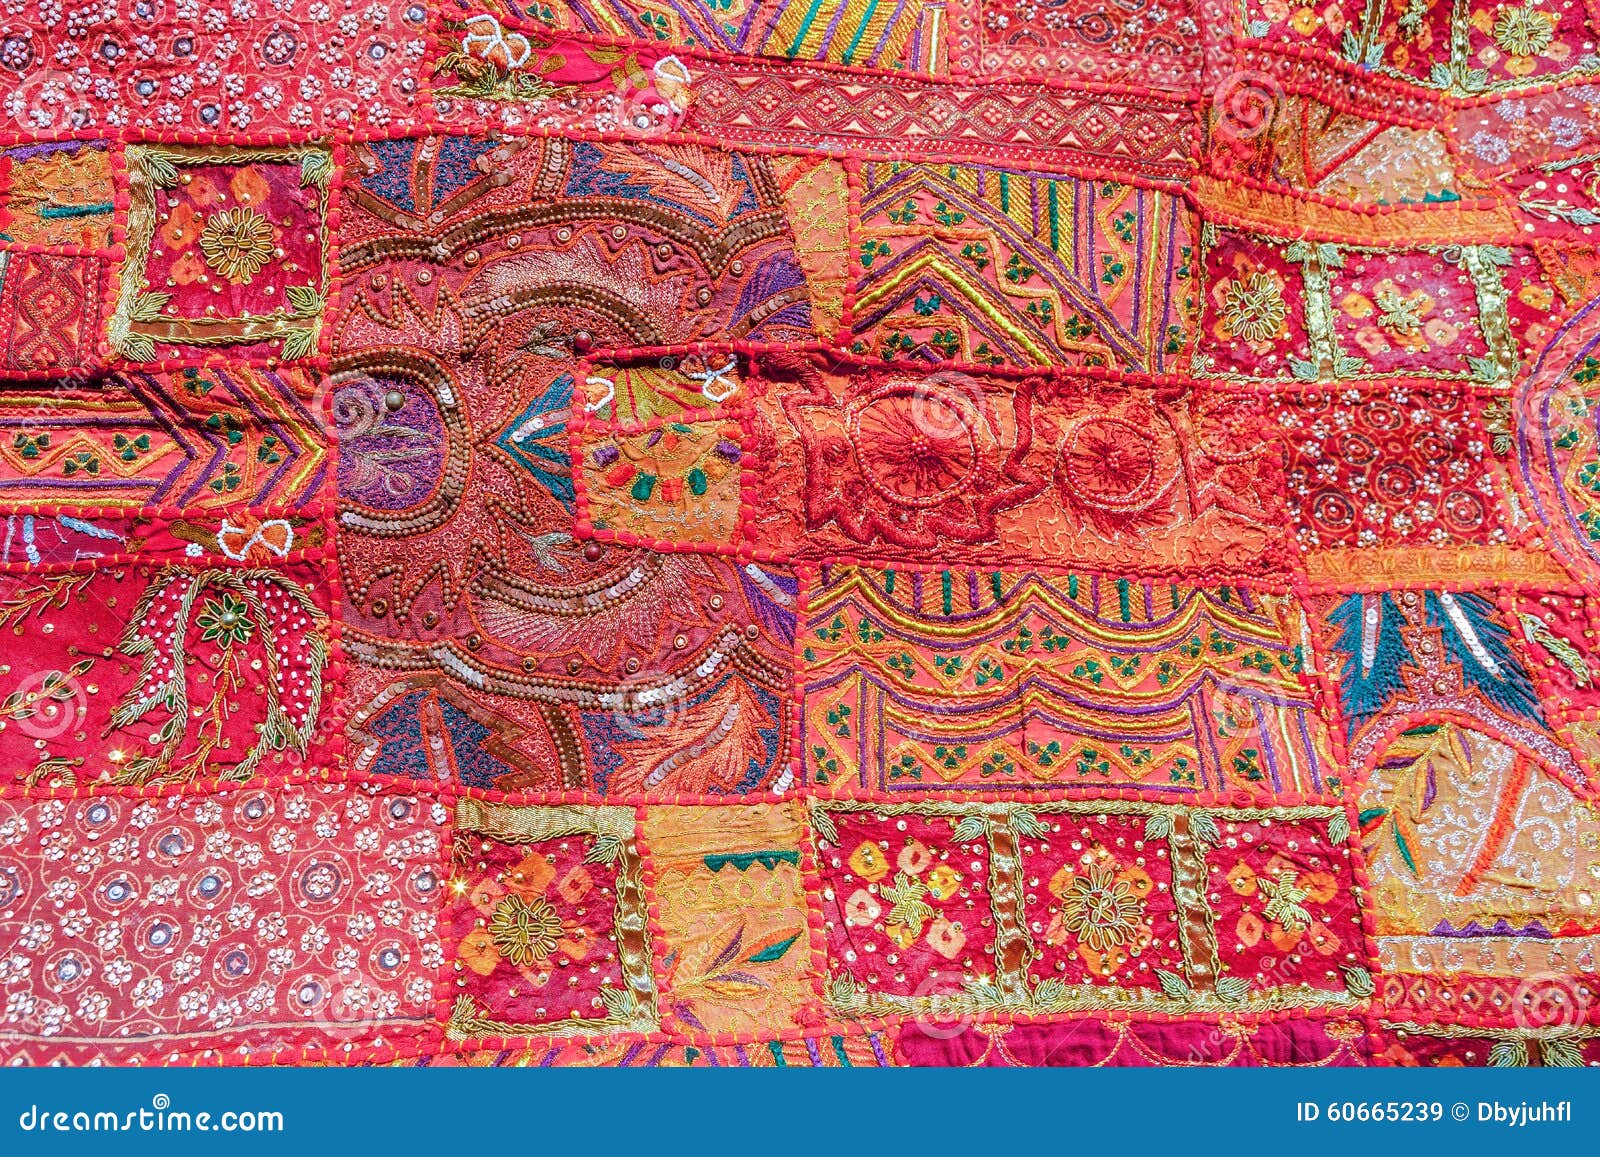 indian patchwork carpet